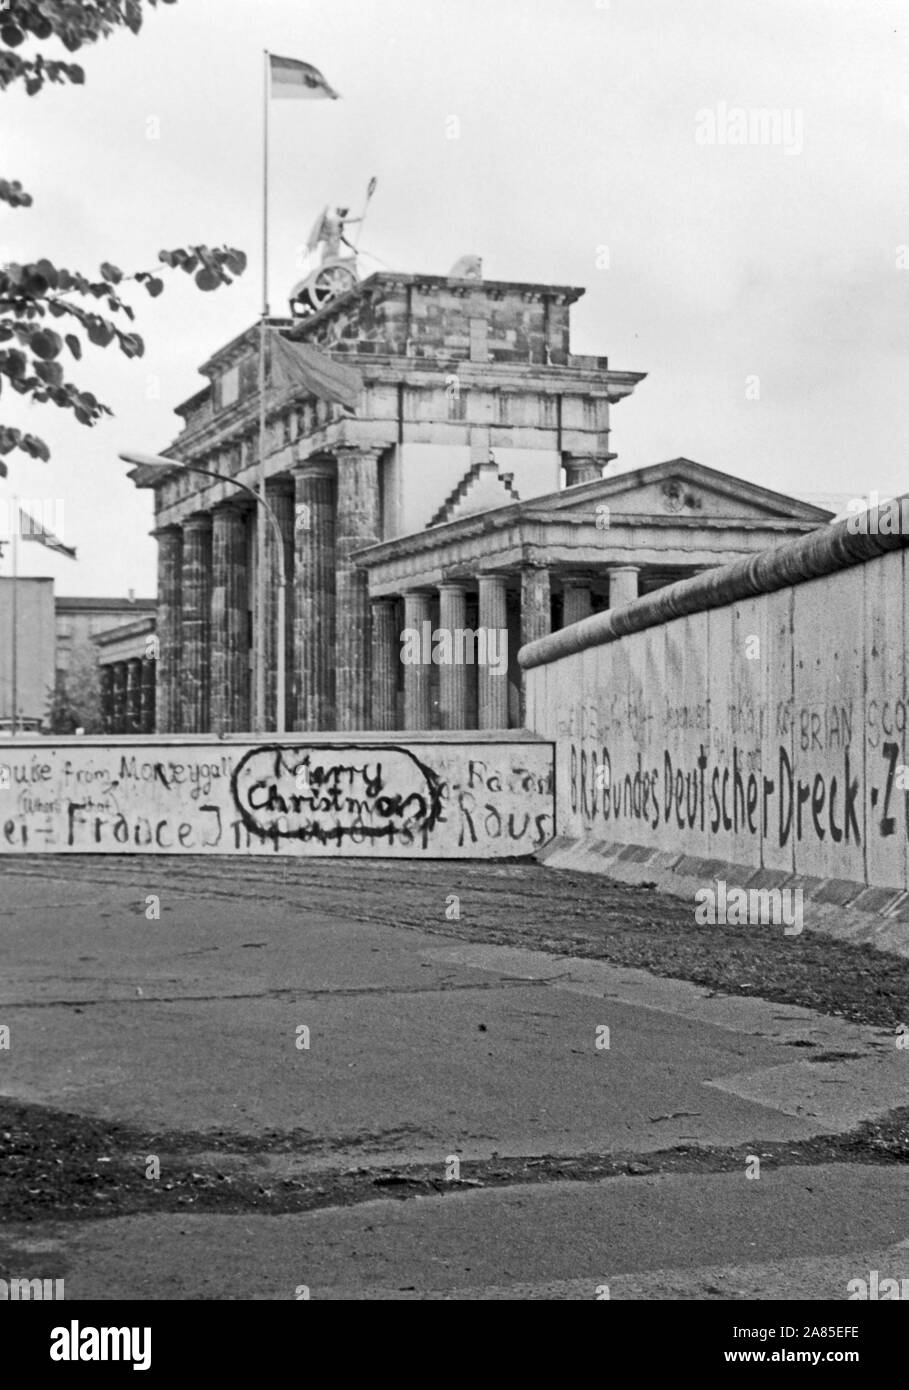 Weihnachtswünsche aufgesprüht auf die Mauer in Berlin am Brandenburger Tor, Deutschland 1984. Fuone Feste spruzzato sul muro di Berlino vicino alla Porta di Brandeburgo, Germania 1984. Foto Stock